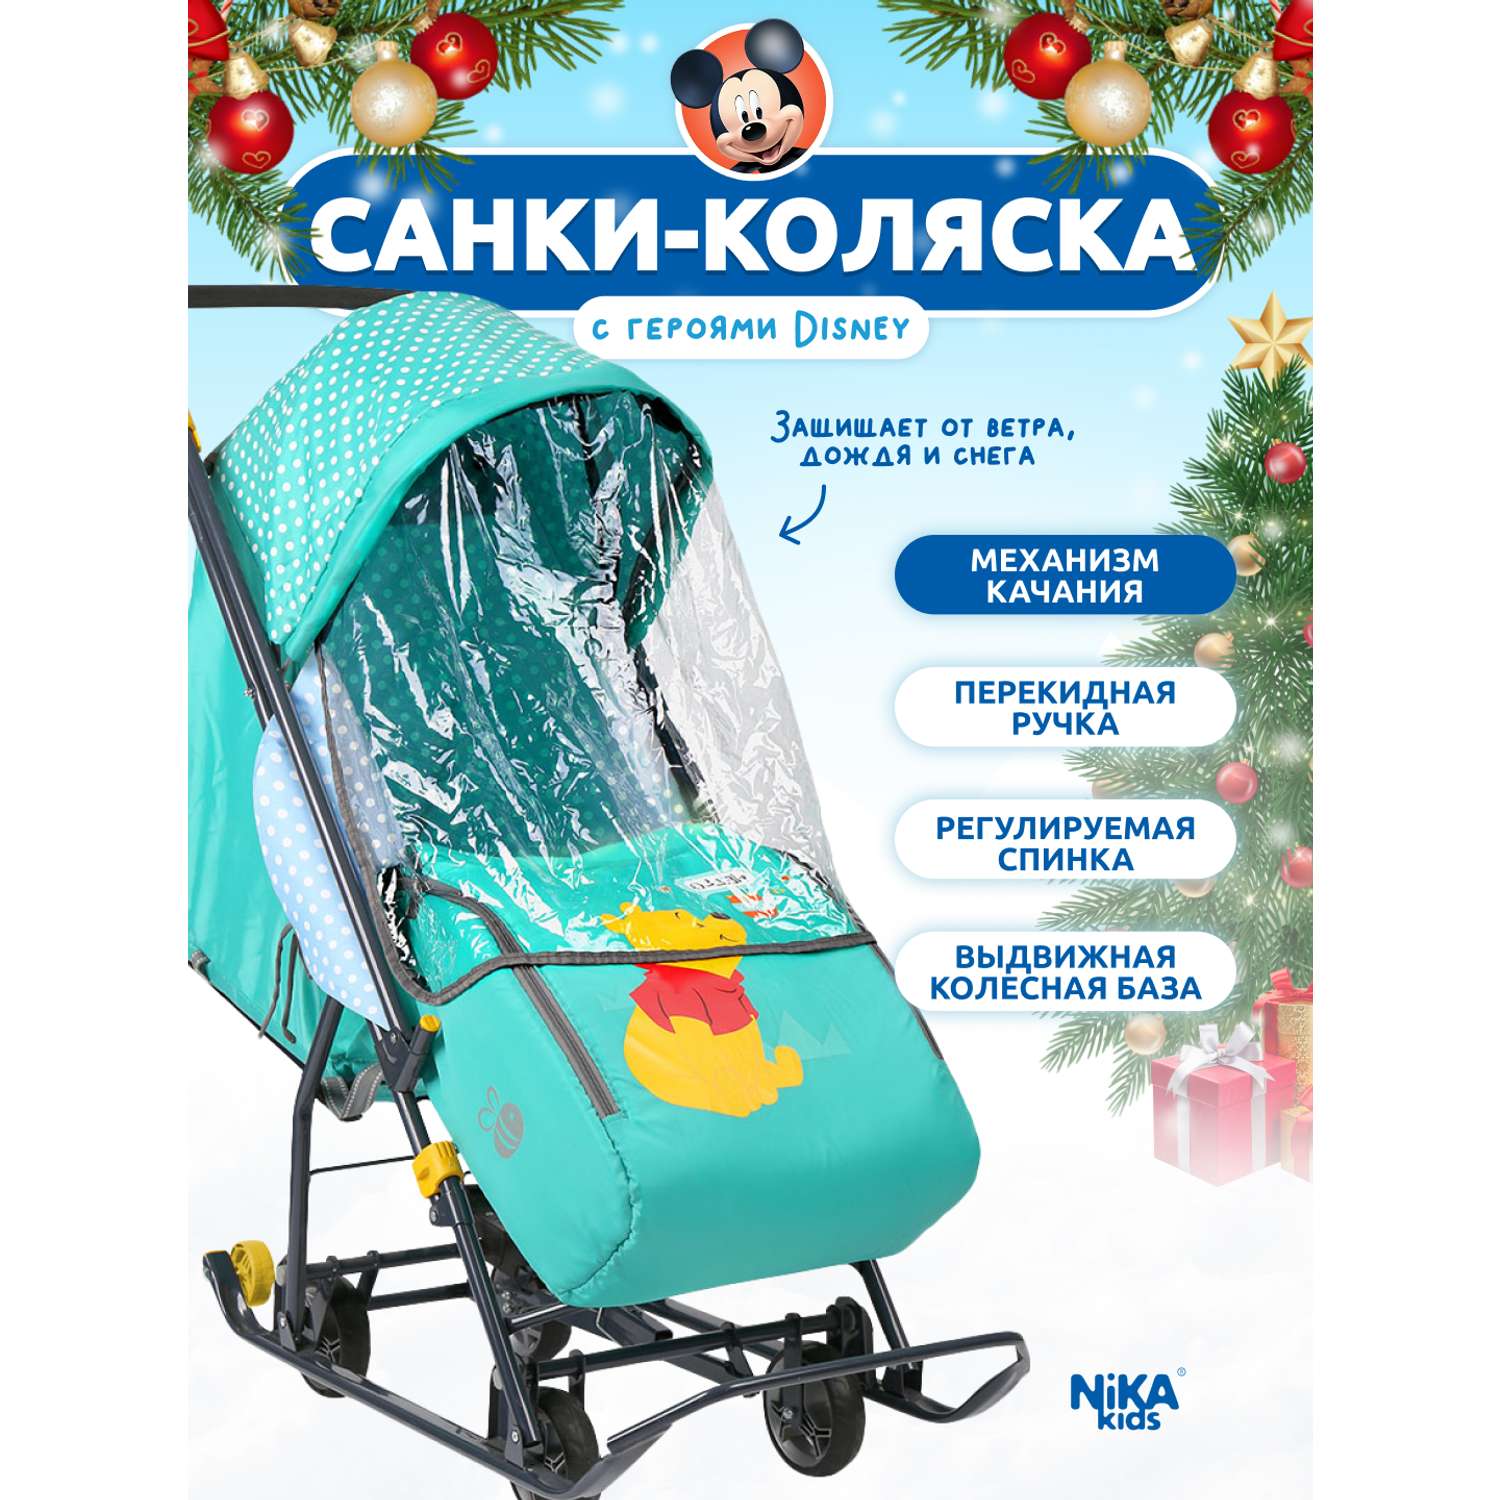 Зимние санки-коляска Nika kids зимние для детей - фото 1